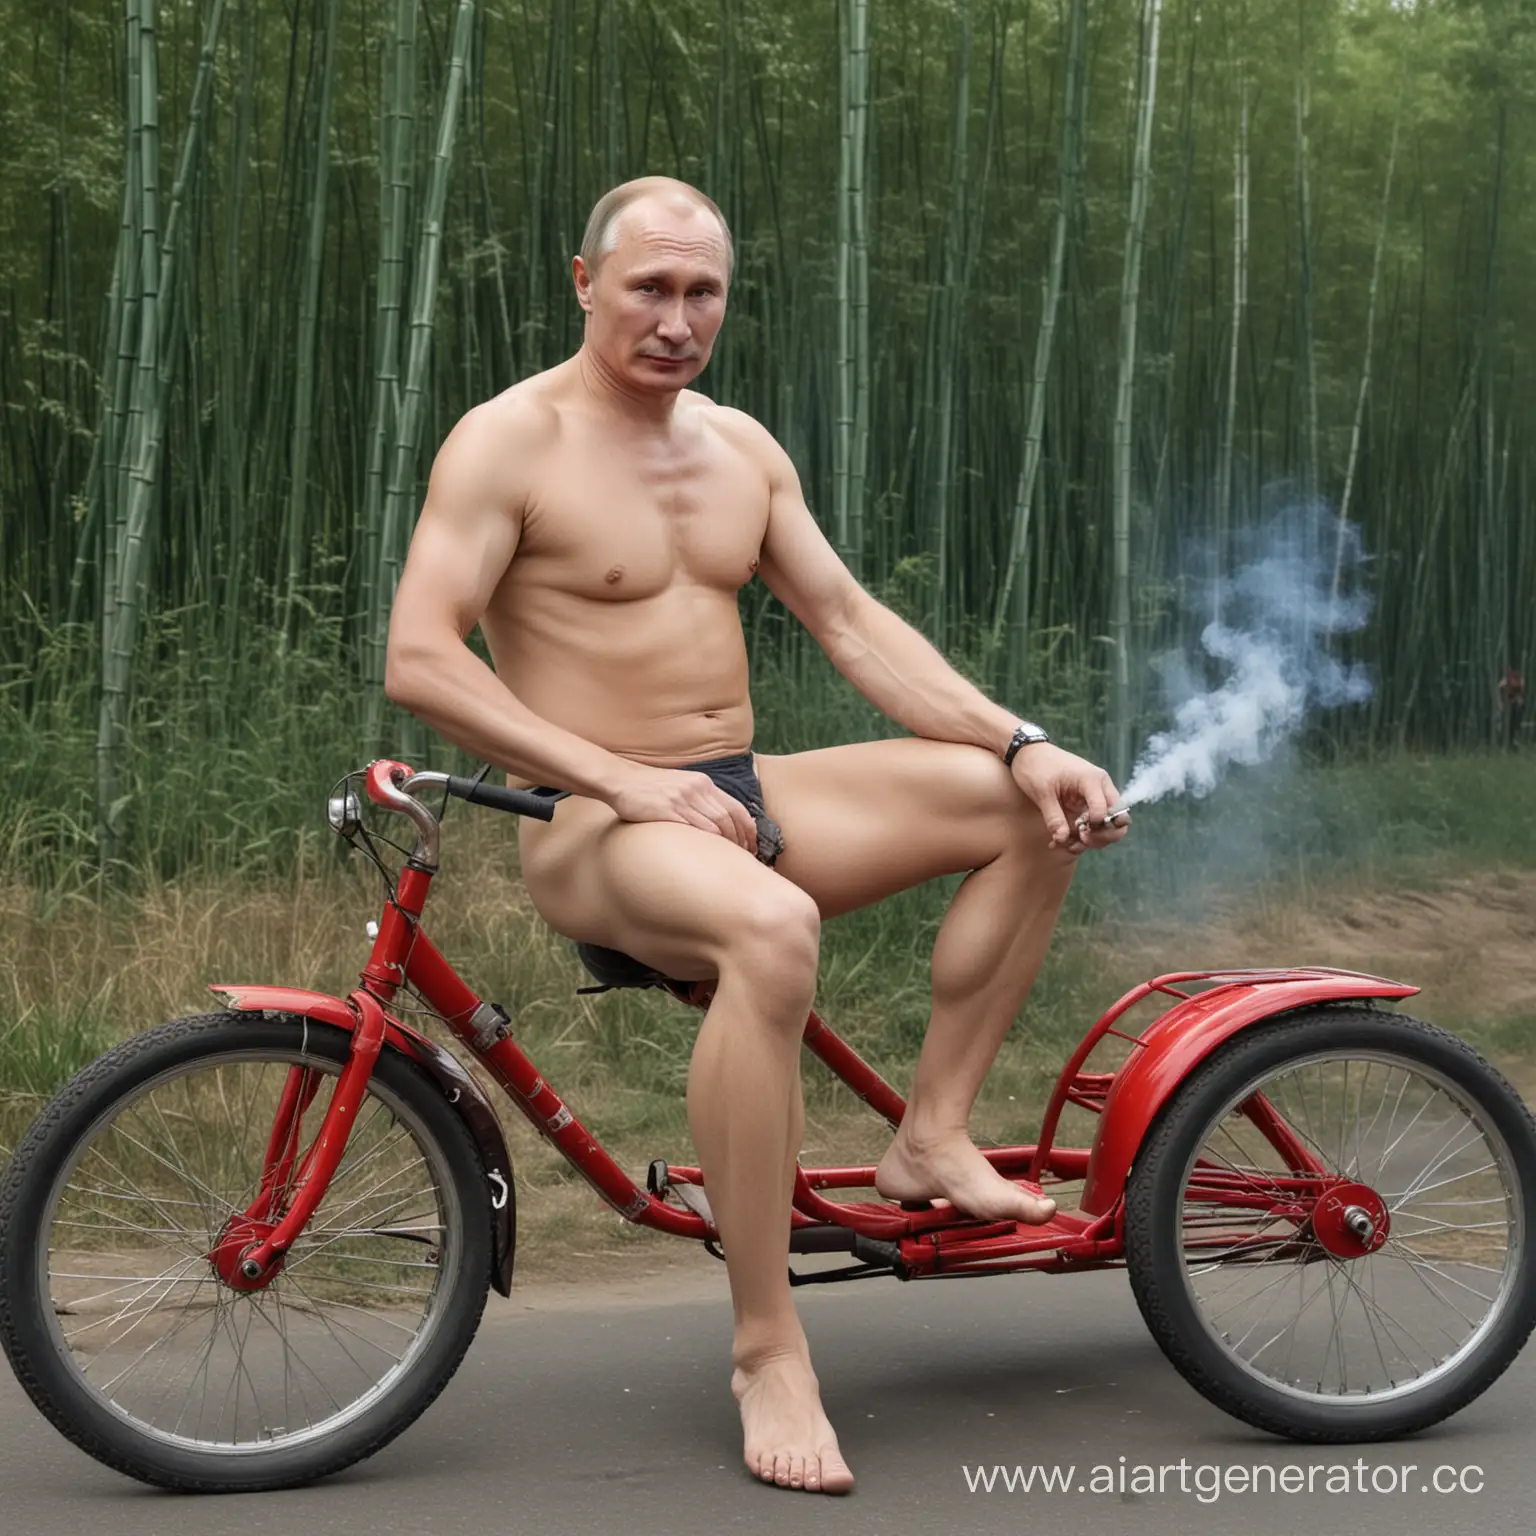 Russian-President-Putin-Smoking-Bamboo-on-Tricycle-in-Underwear